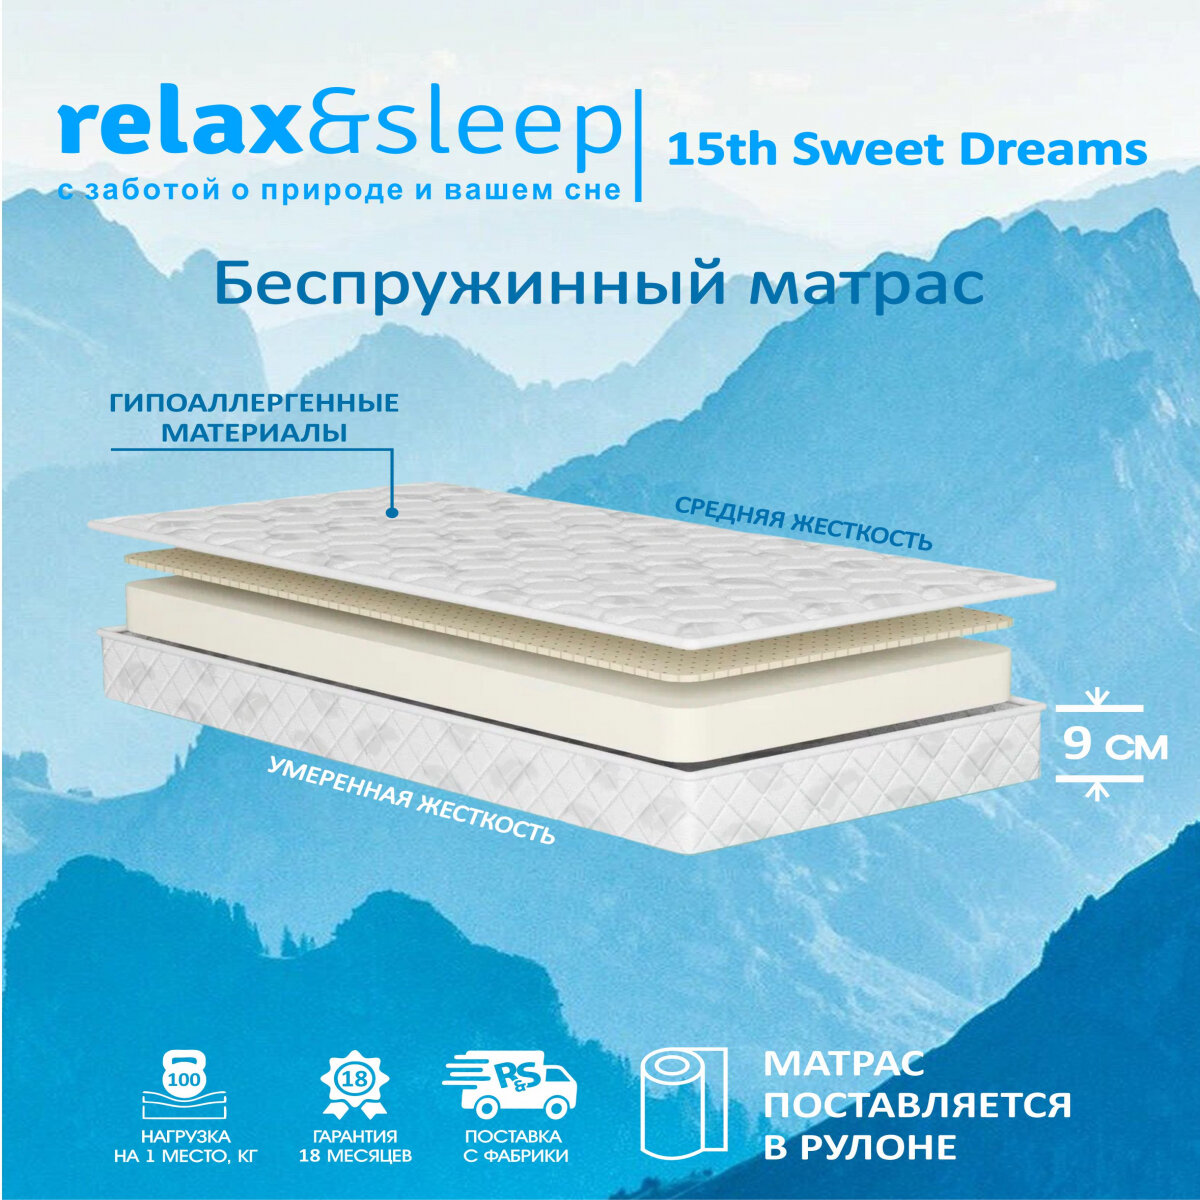 Матрас Relax&Sleep ортопедический беспружинный 15th Sweet Dreams (120 / 185)